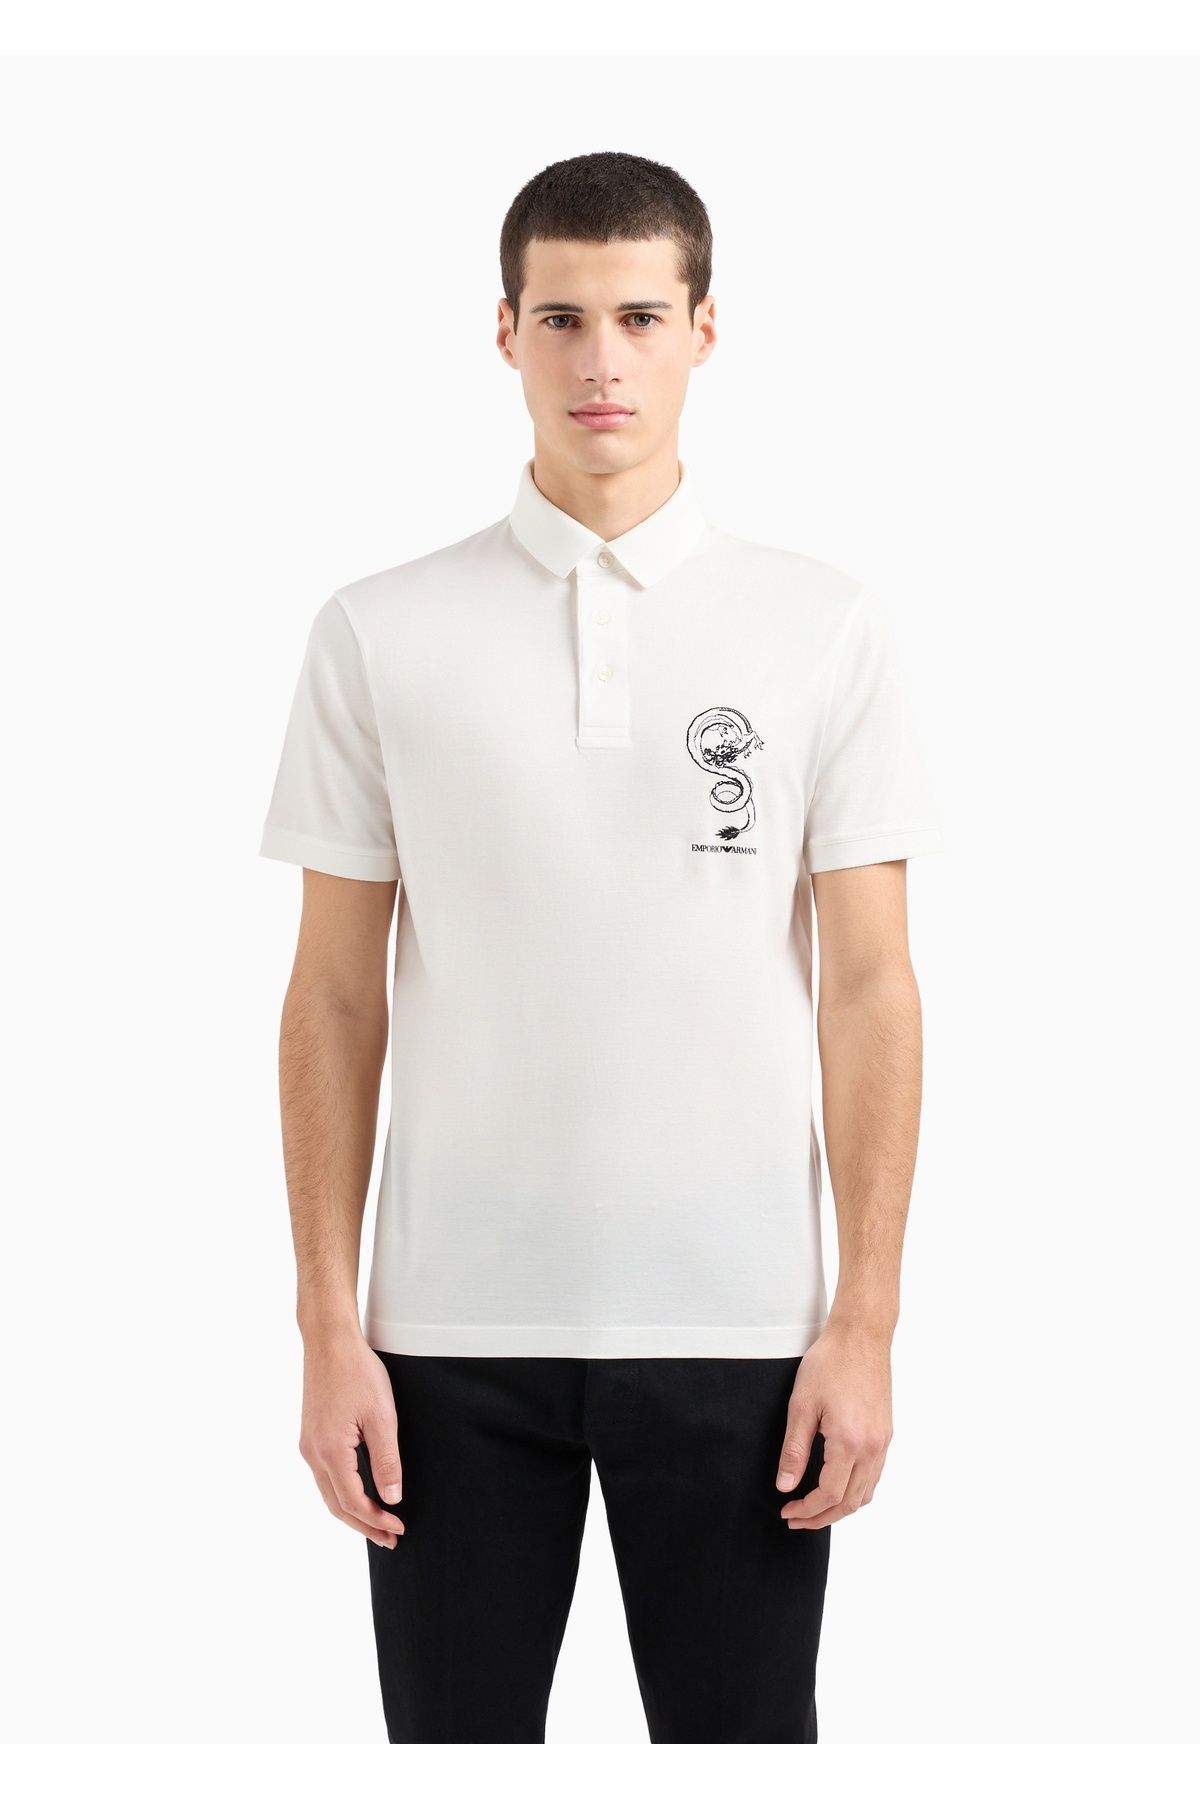 Emporio Armani Erkek Kısa Kol Regular Fit Polo Yaka Günlük Beyaz Polo Yaka T-Shirt EM000007 AF10017-U0003